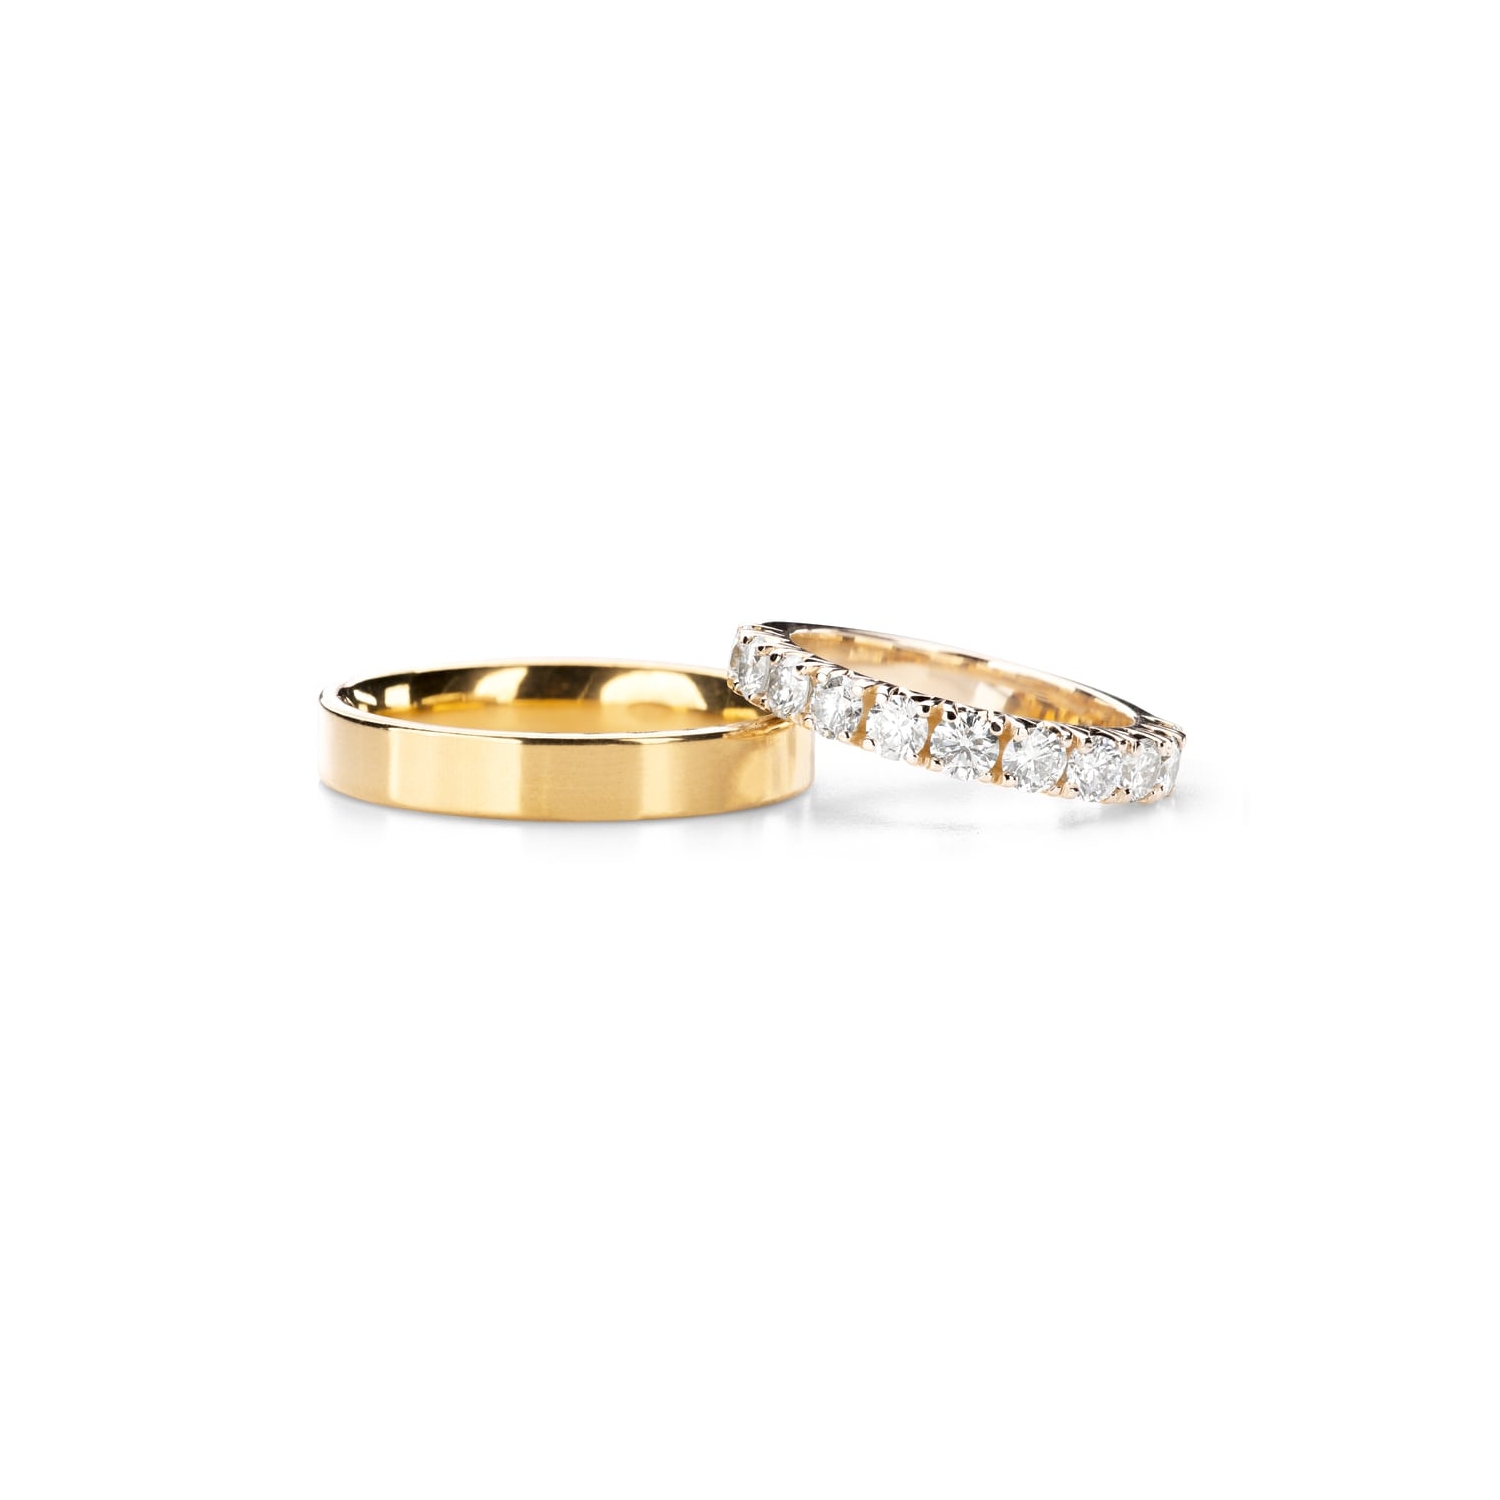 Golden wedding rings with diamonds "VKA 341"